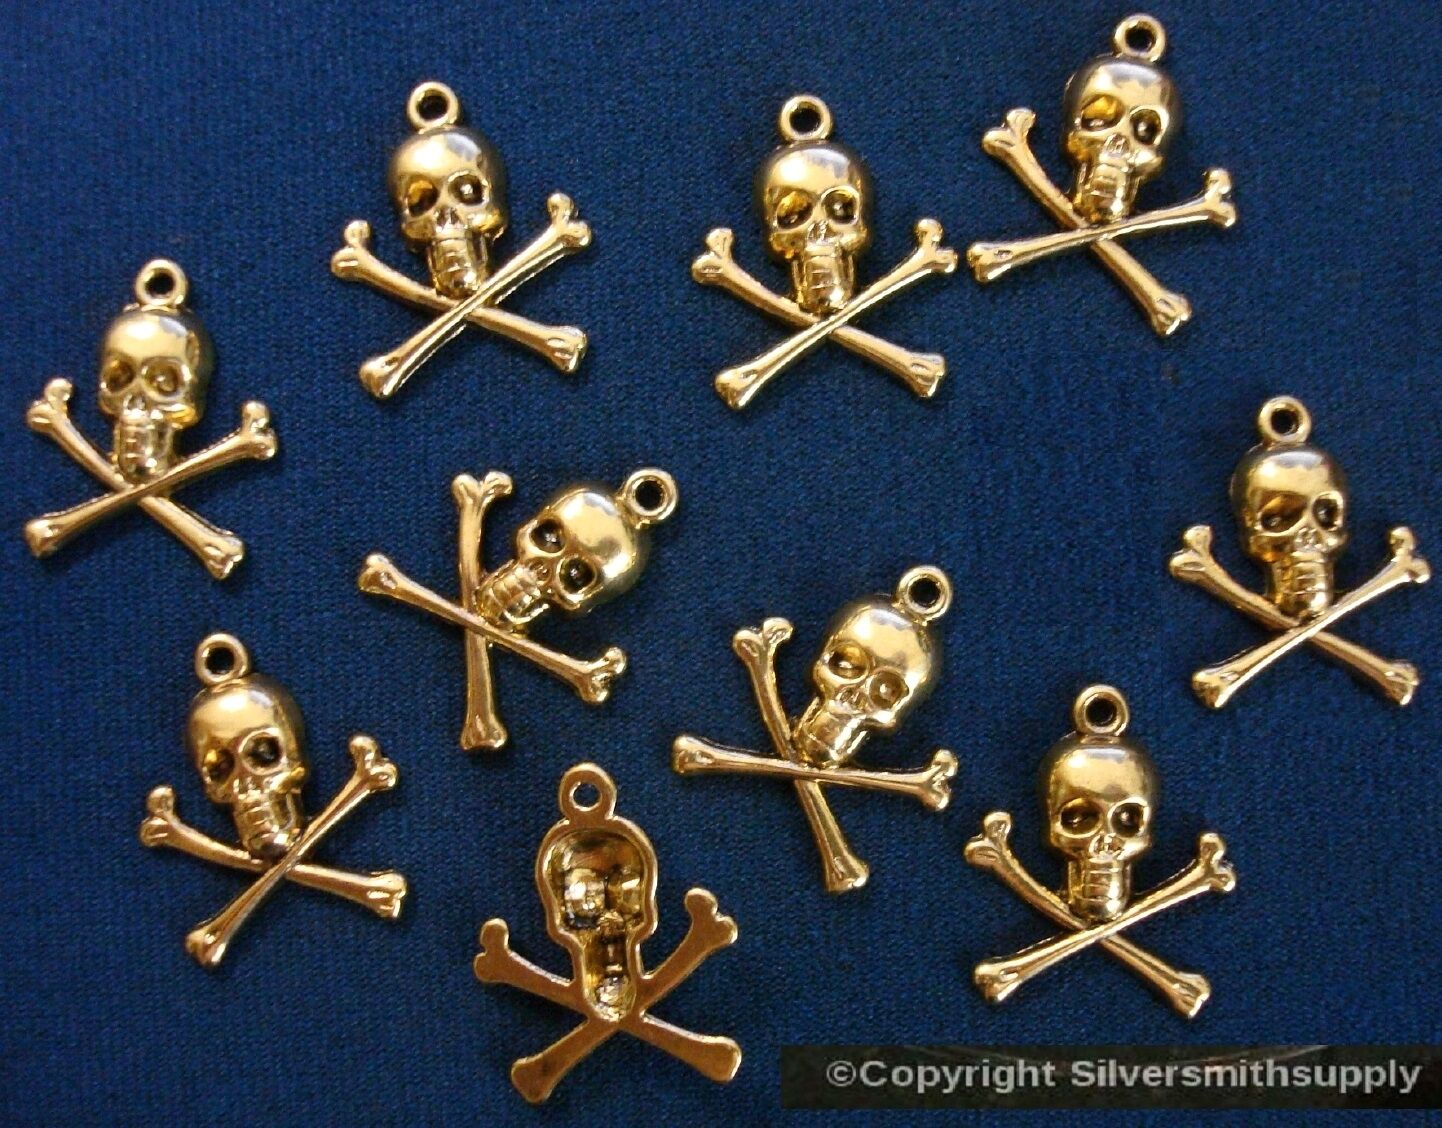 10 Golden skulls jewelry pendant charms ant gold plated skull findings CFP084 Silversmithsupply.com - фотография #2